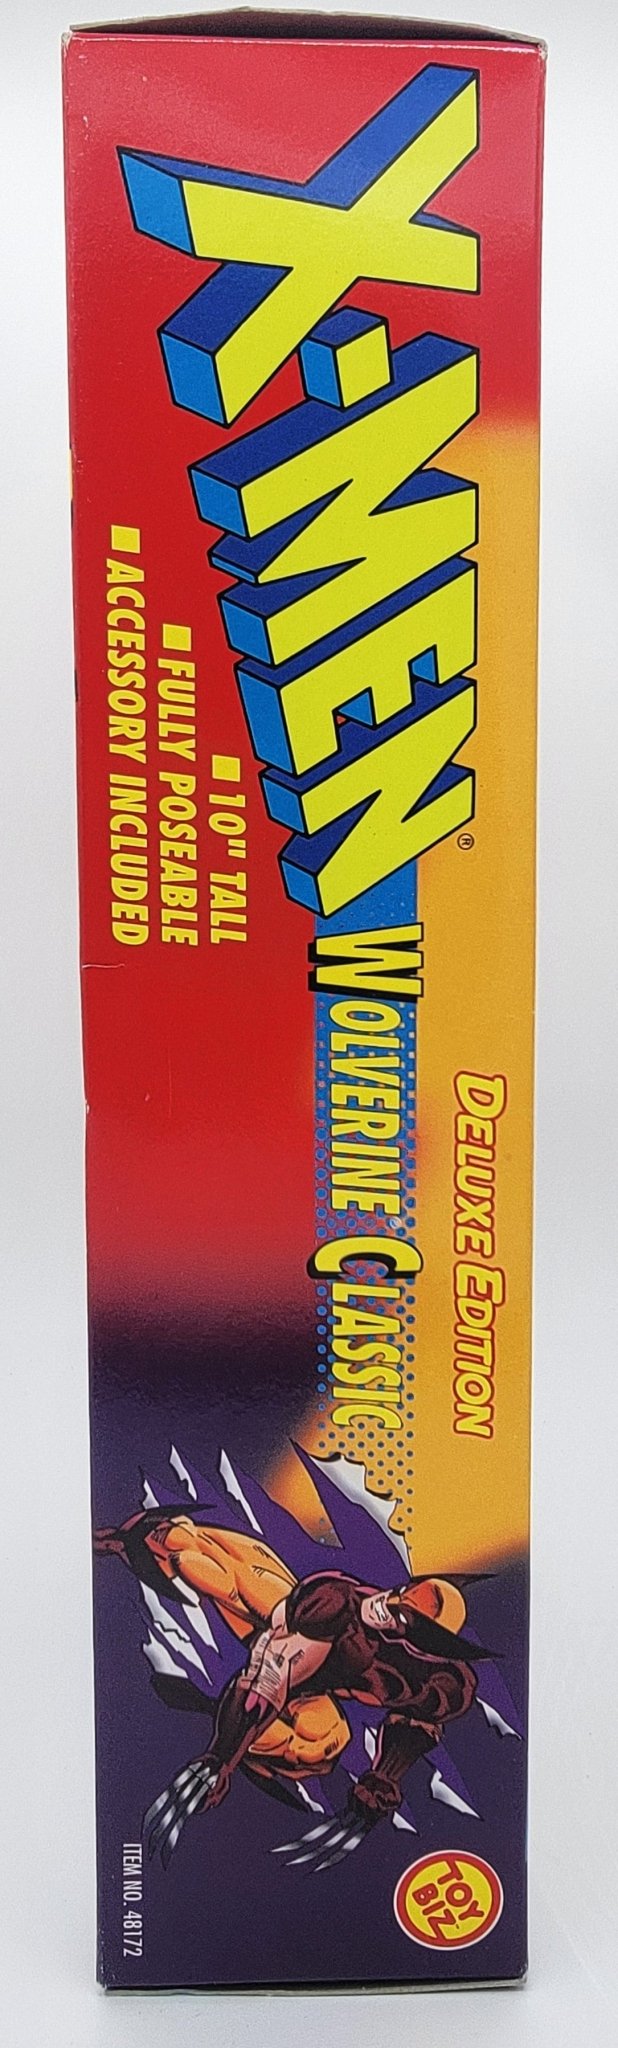 Toy Biz - Toy Biz | X-Men Deluxe Edition Wolverine Classic 1996 | Deluxe Edition Vintage Marvel Action Figure - Action Figures - Steady Bunny Shop